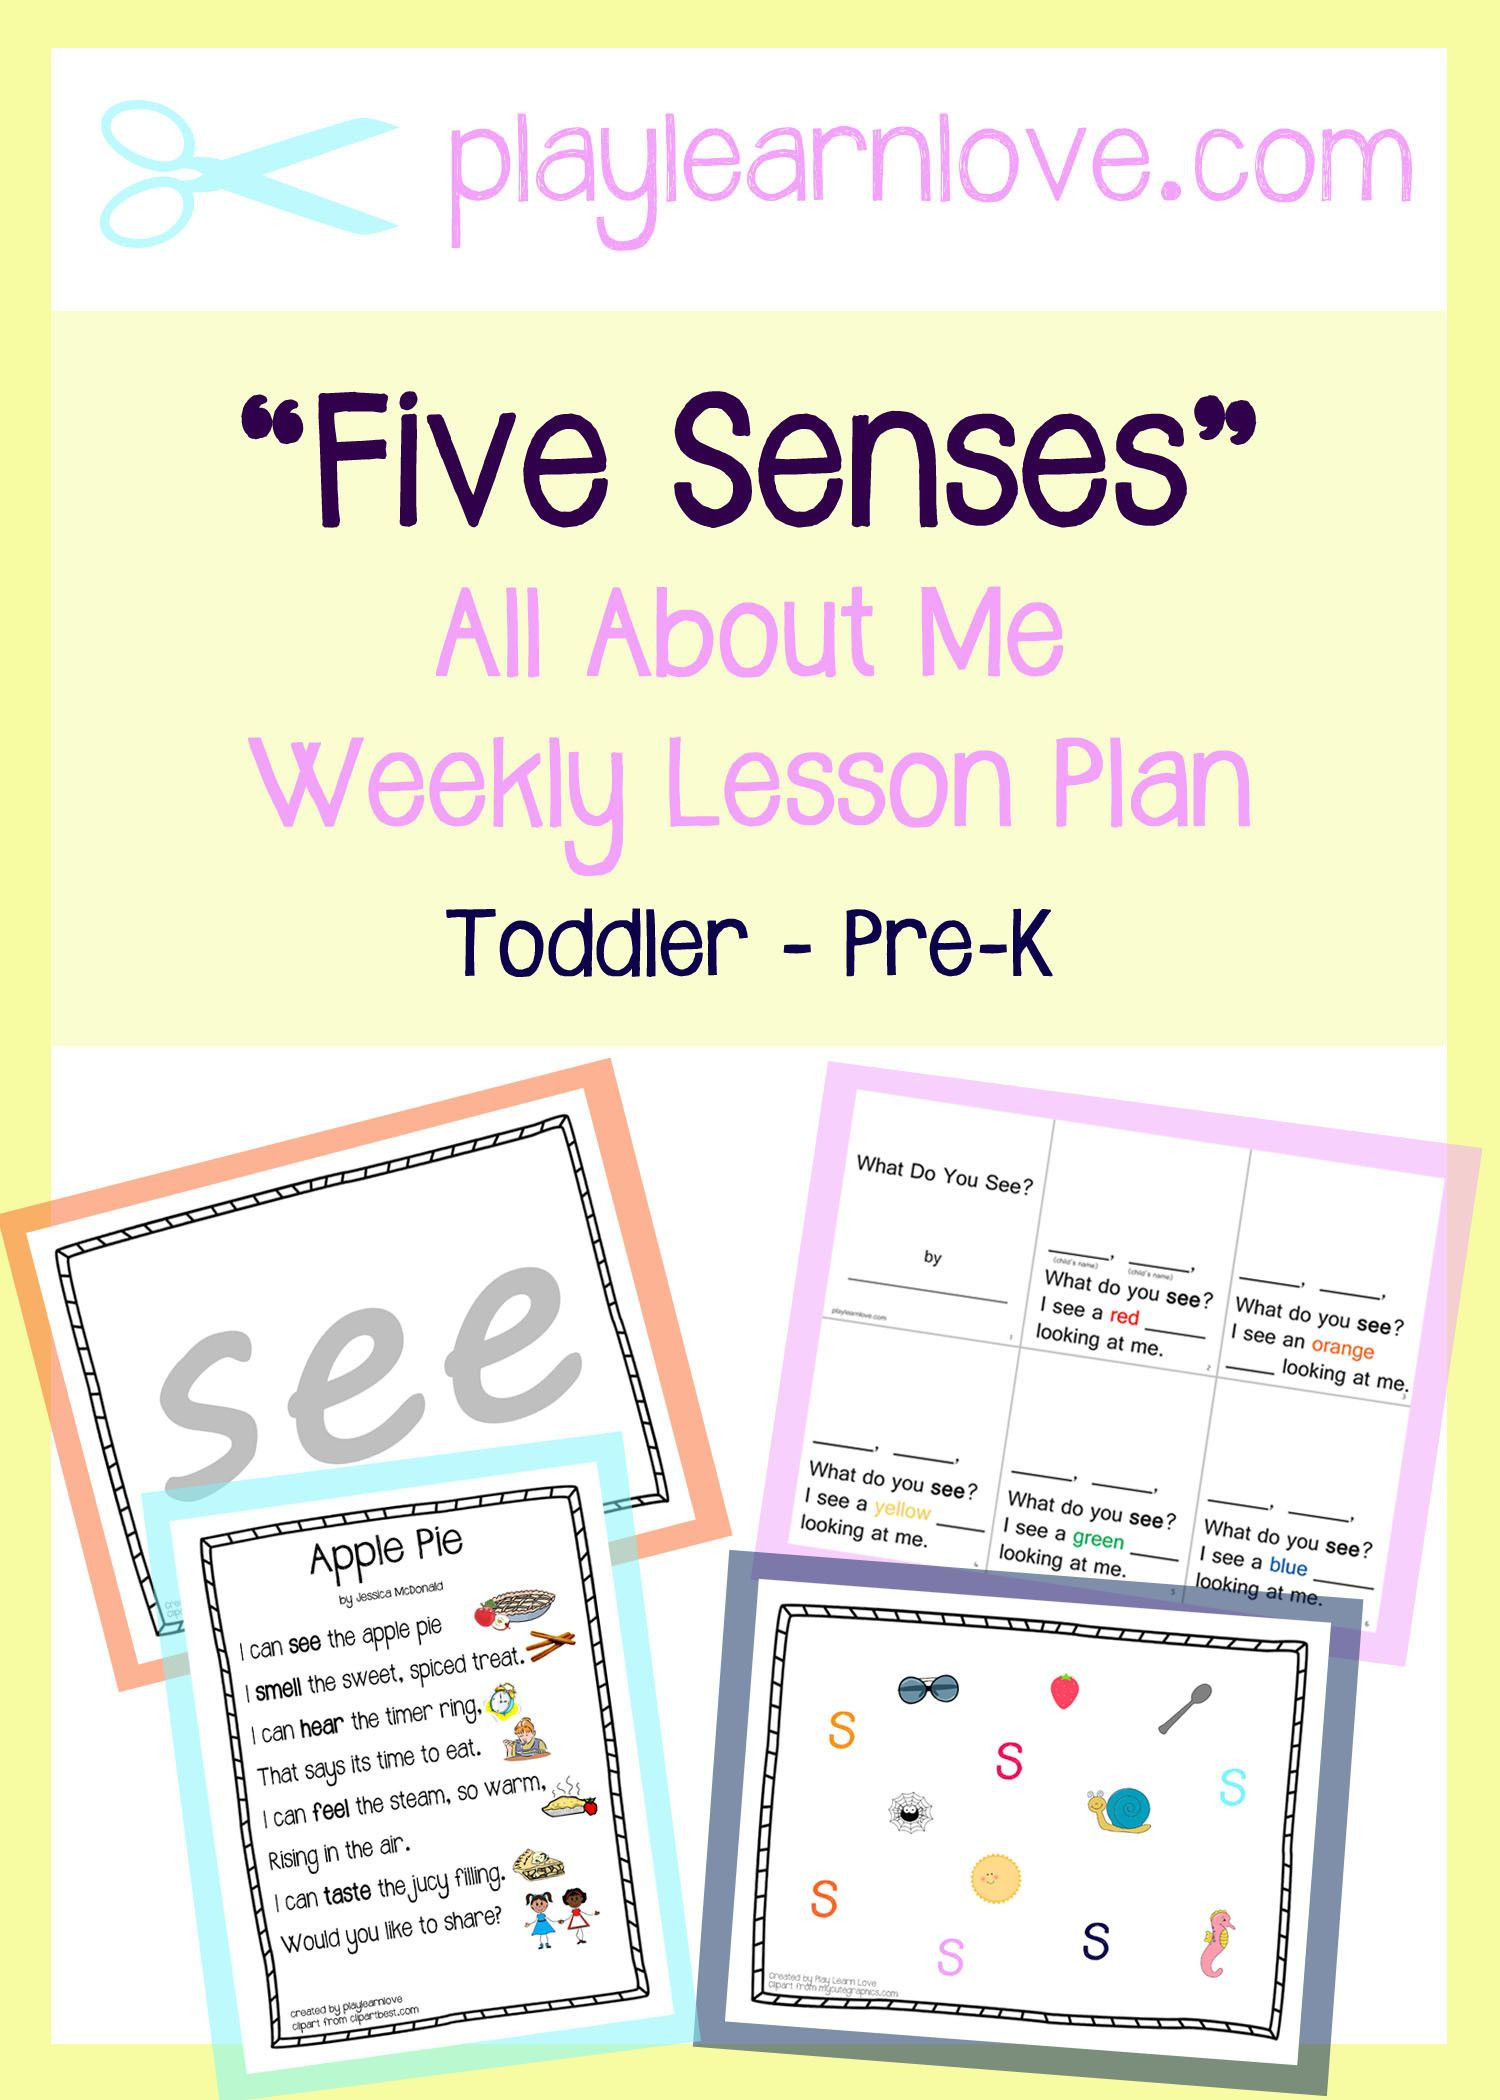 5 Senses Lesson Plans Five Senses Lesson Plan Preschool and toddler All